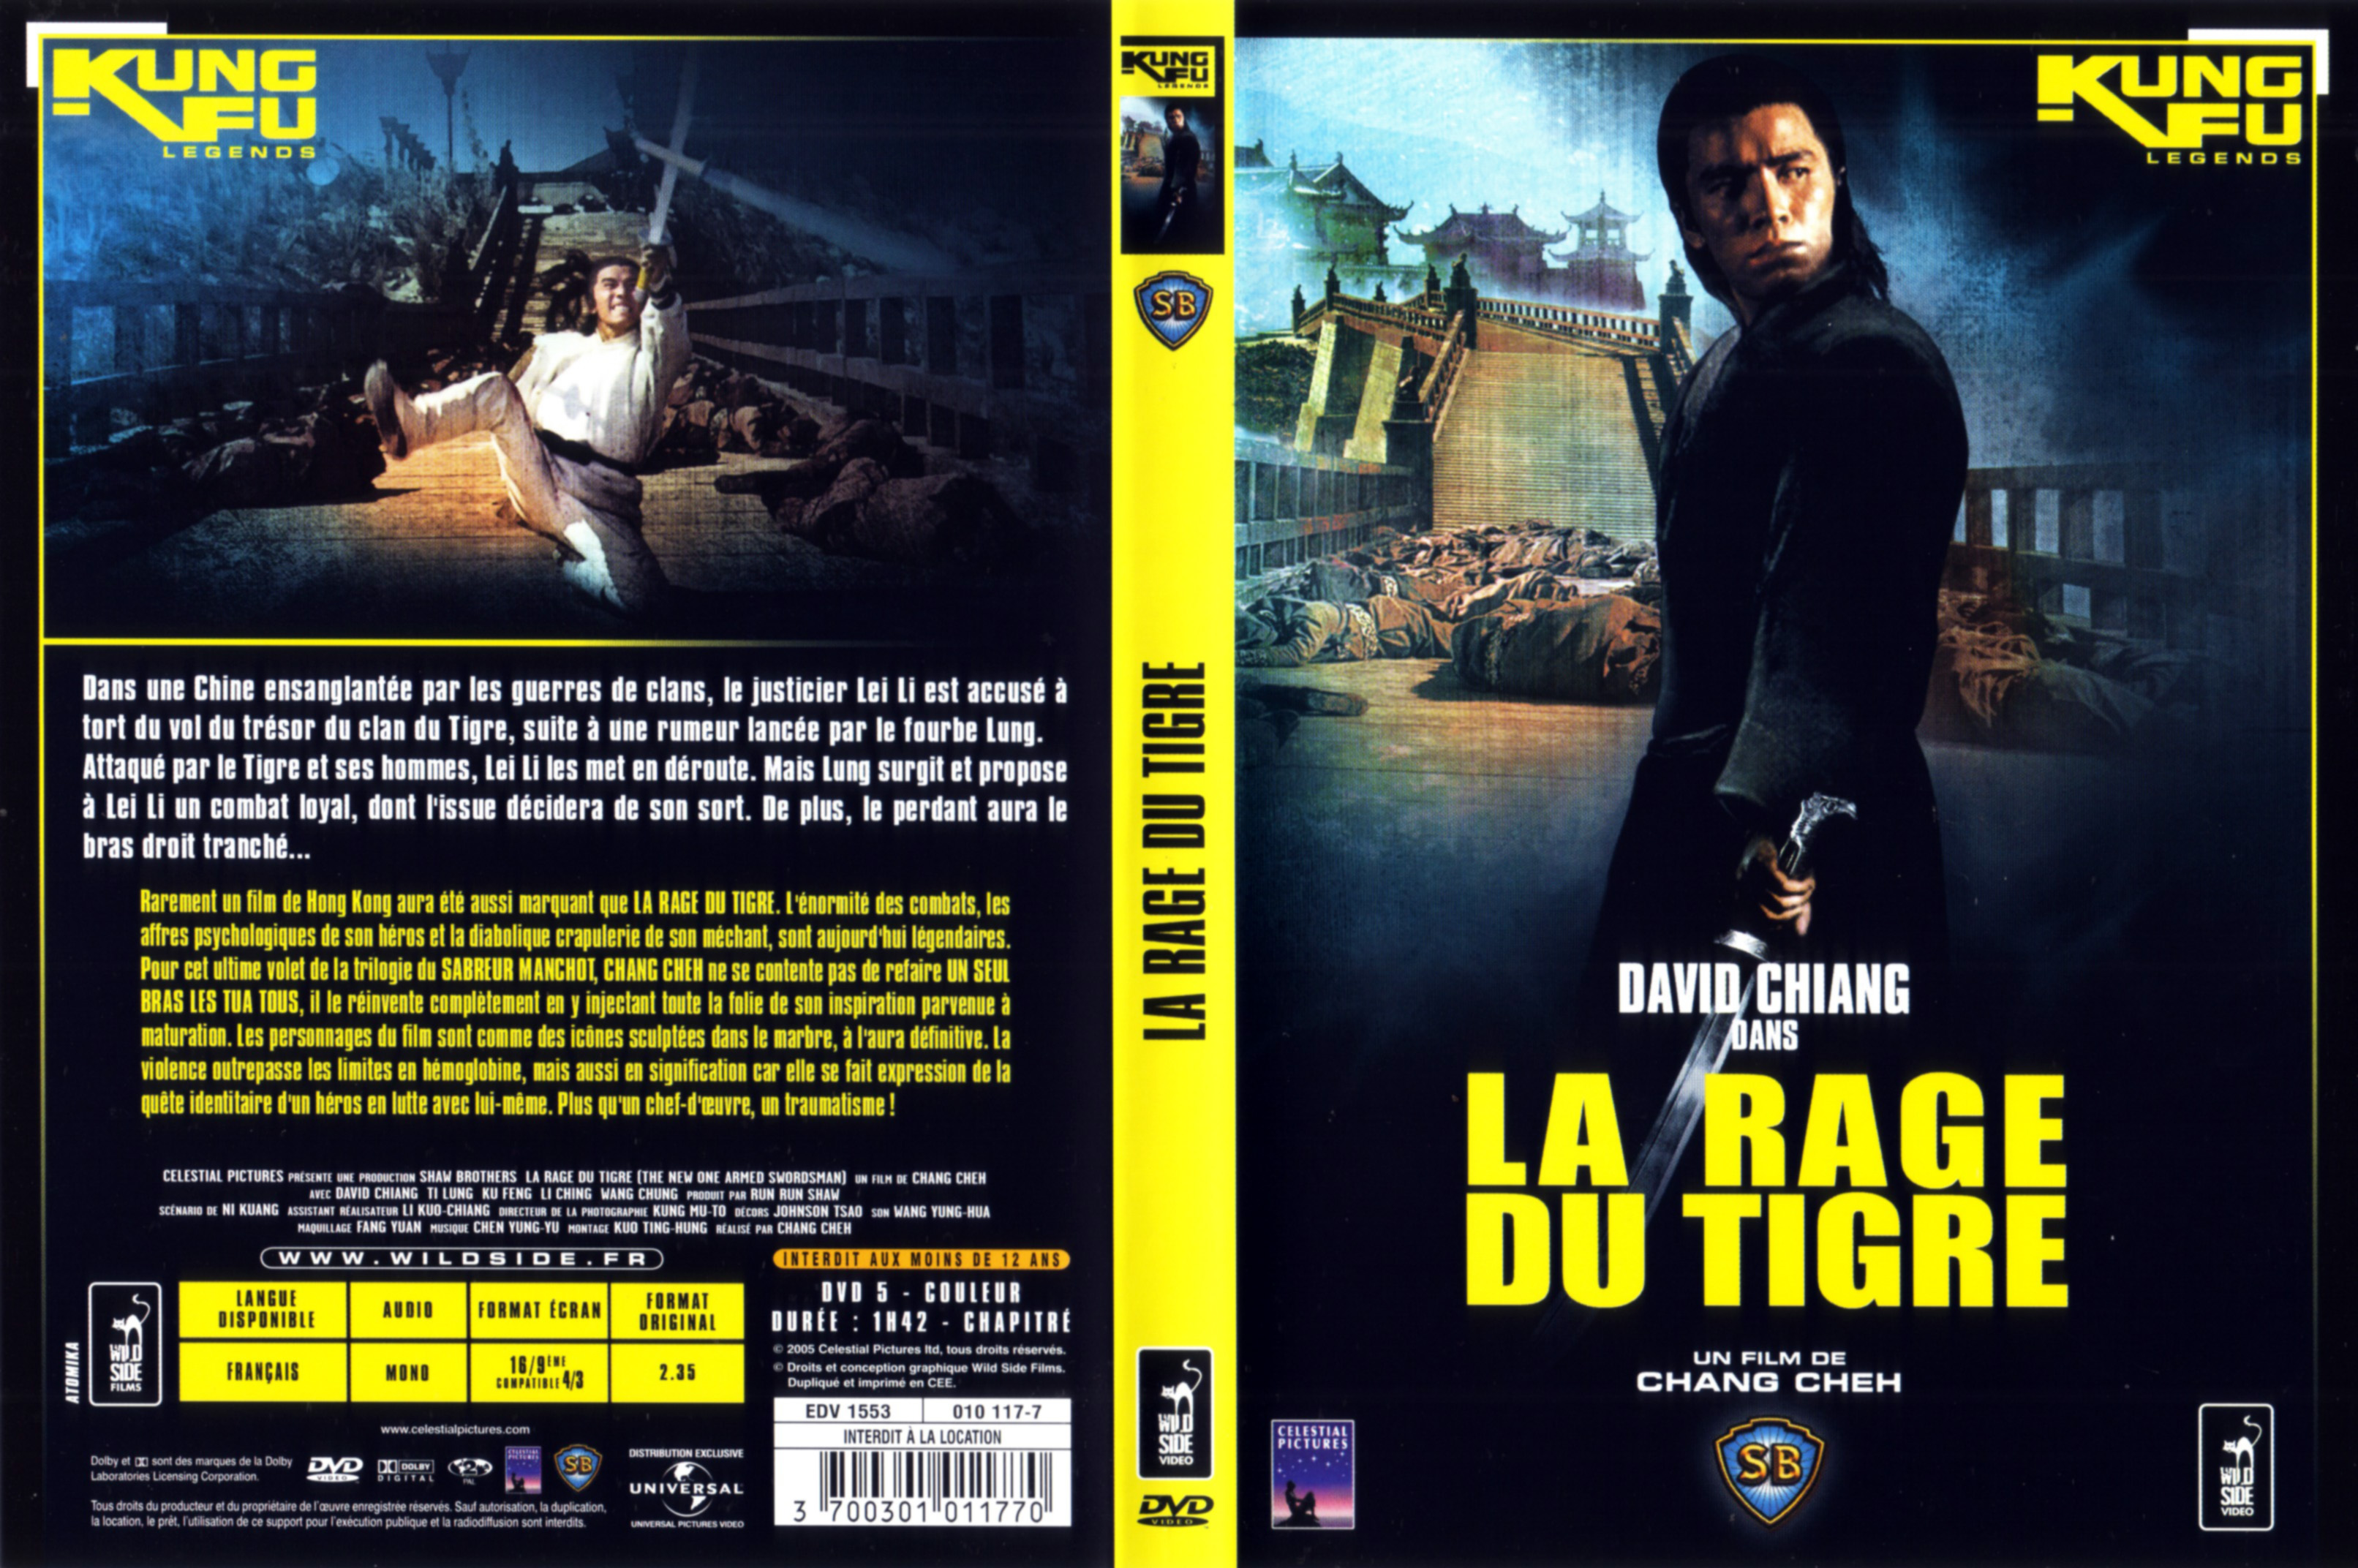 Jaquette DVD La rage du tigre v3